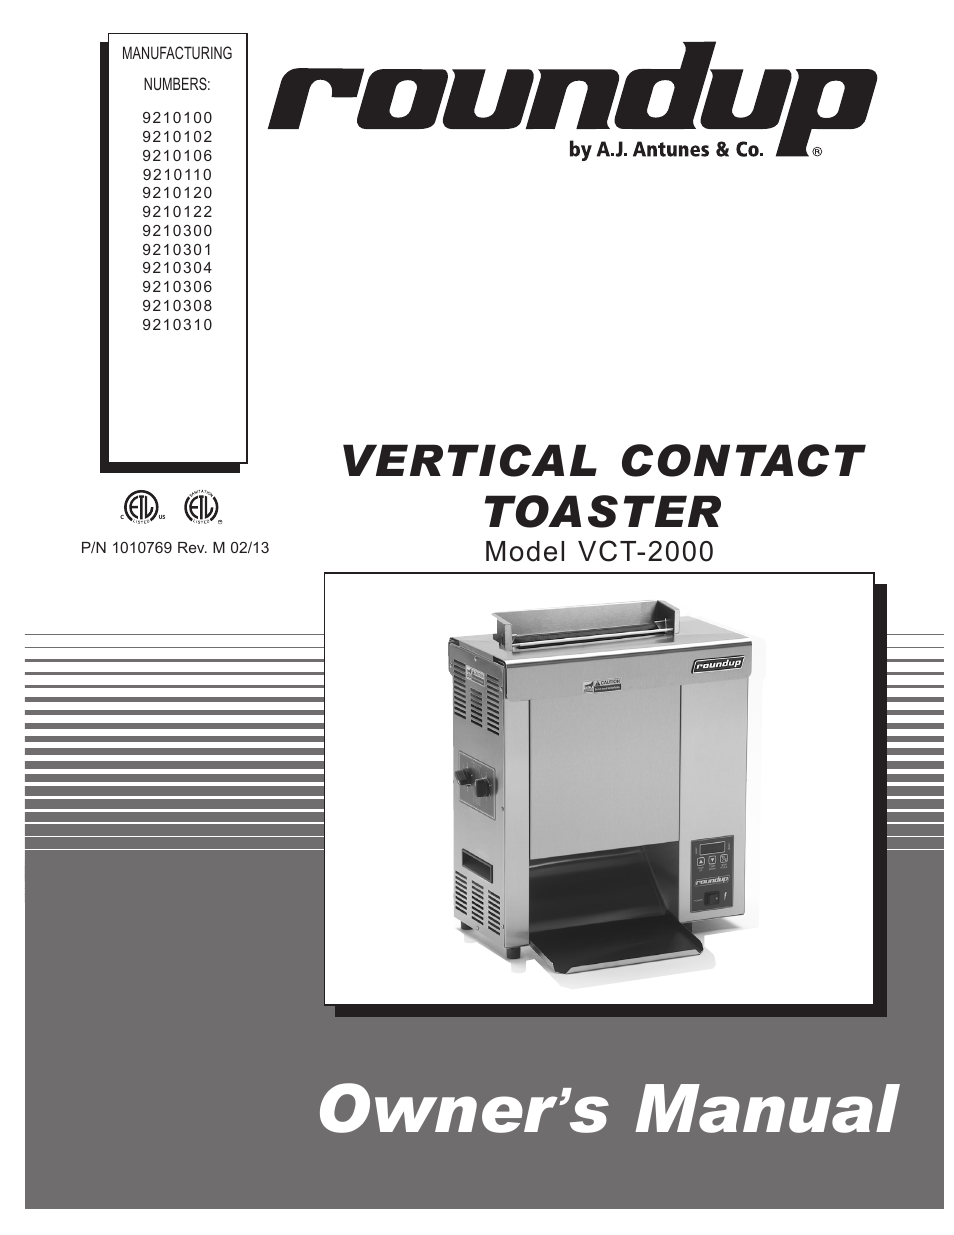 VCT-2000 9210304